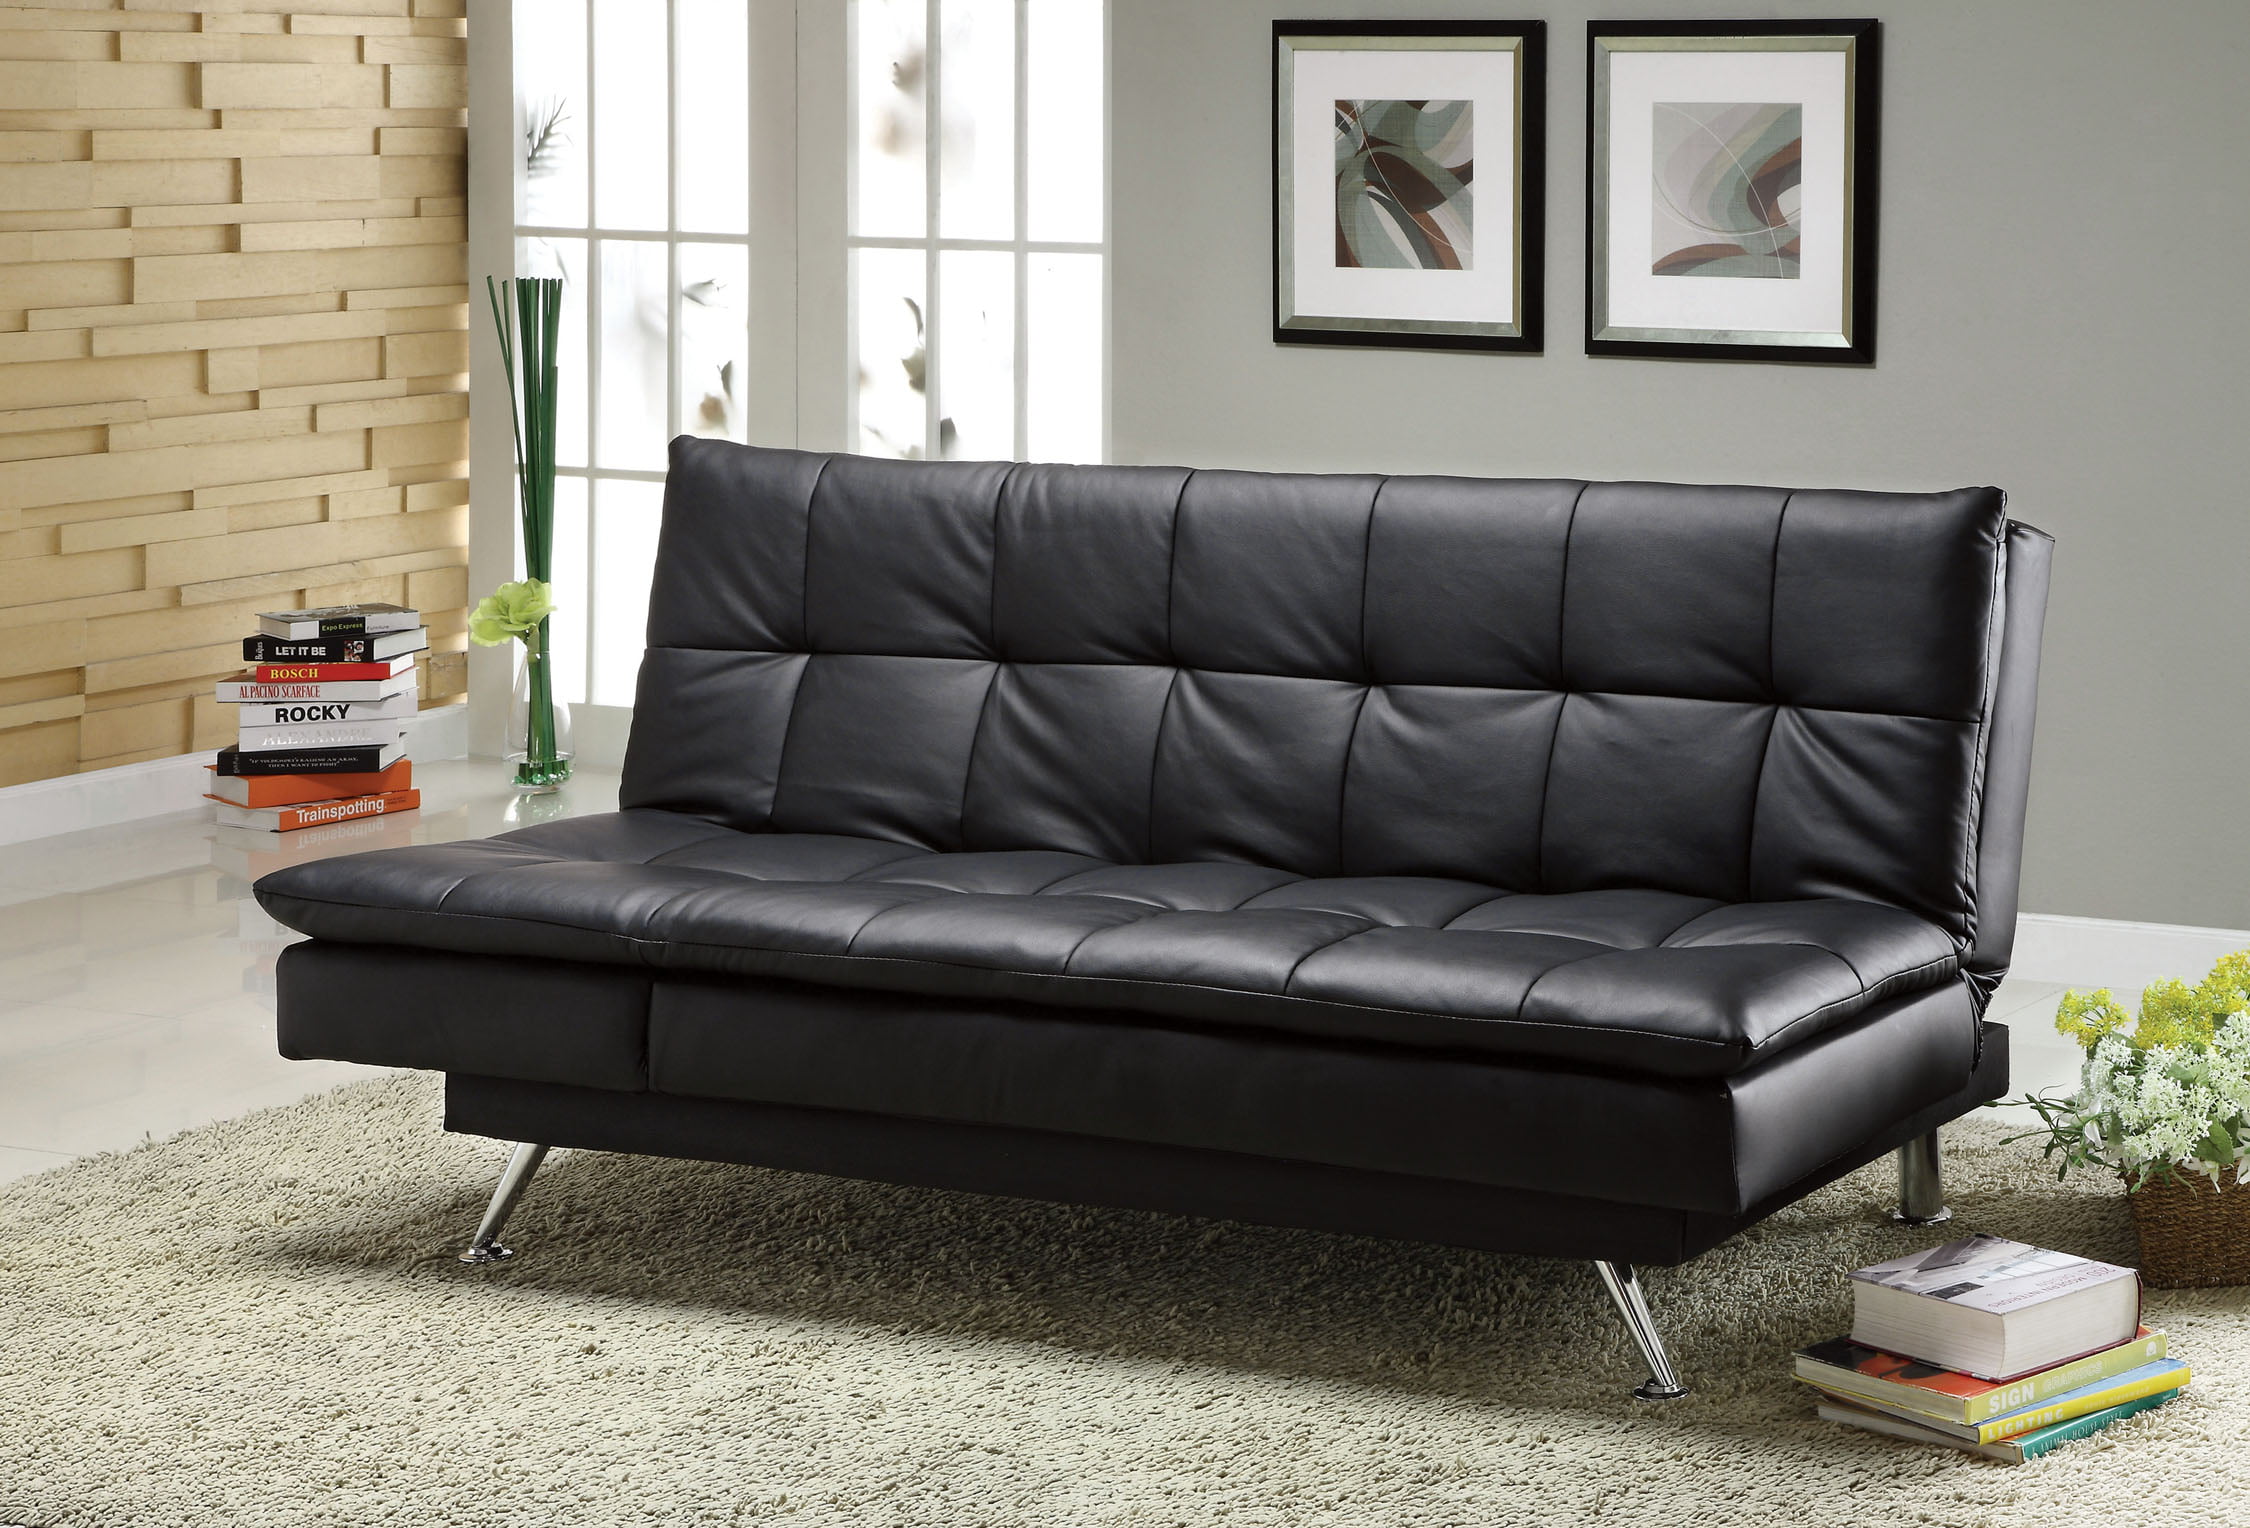 easyfashion convertible black faux leather futon sofa bed